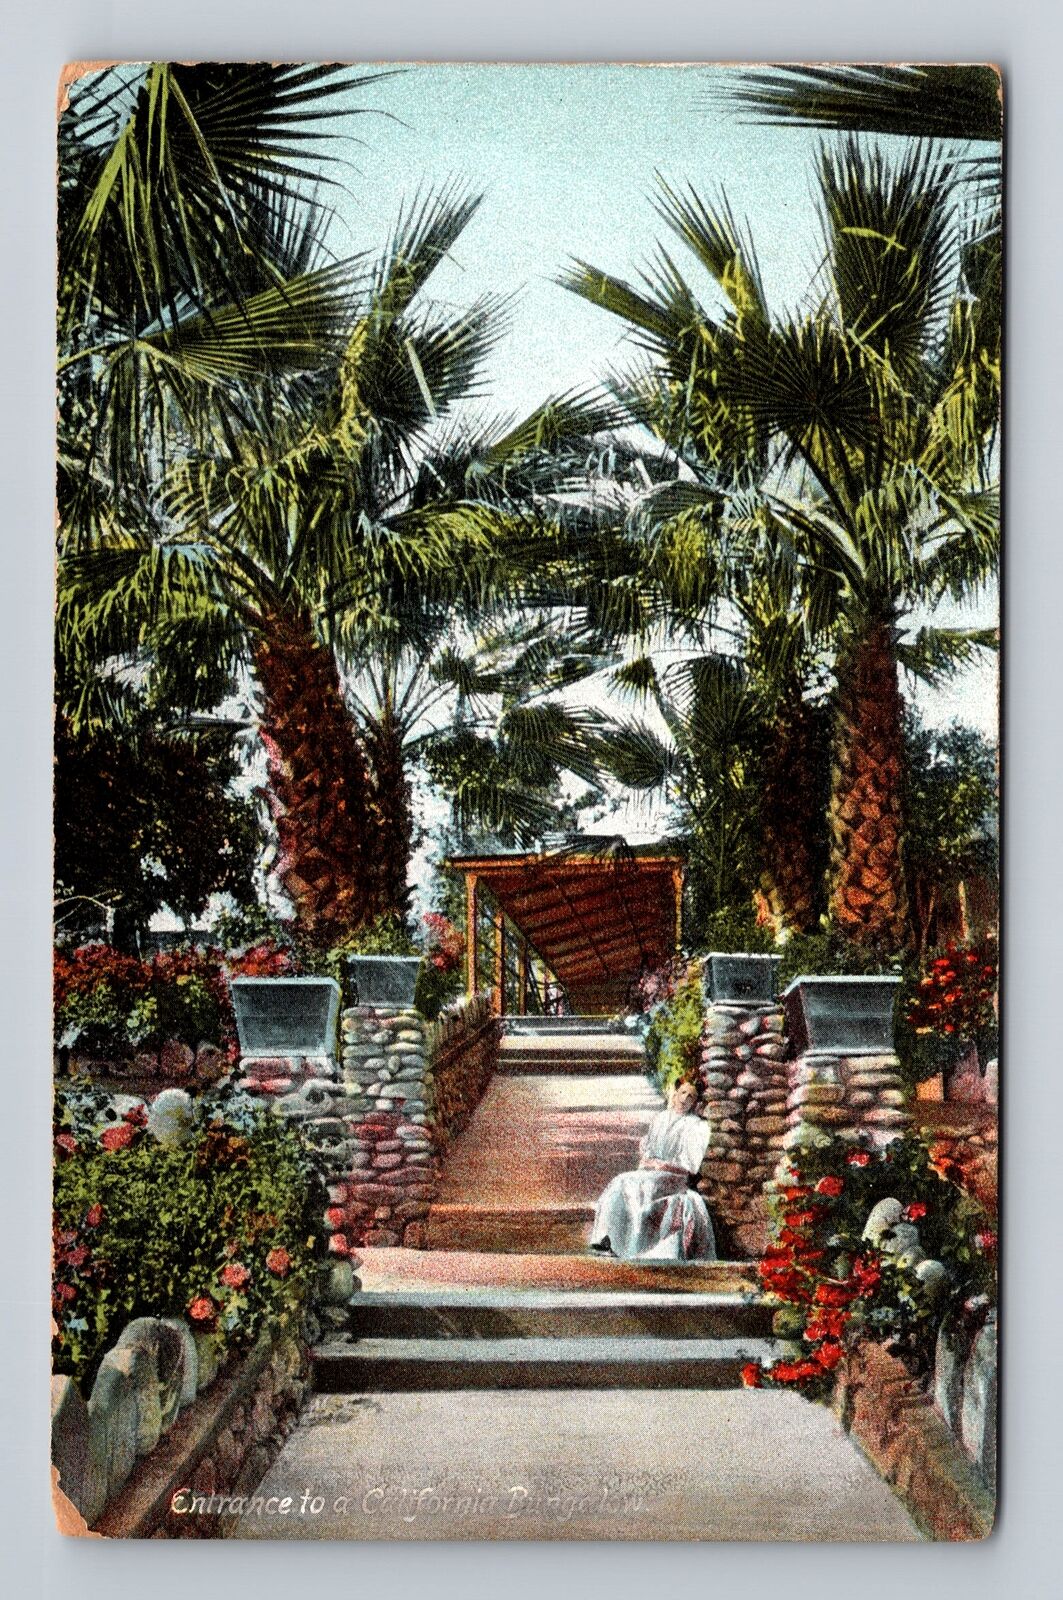 CA-California, Entrance to California Bungalow, Antique Vintage Postcard